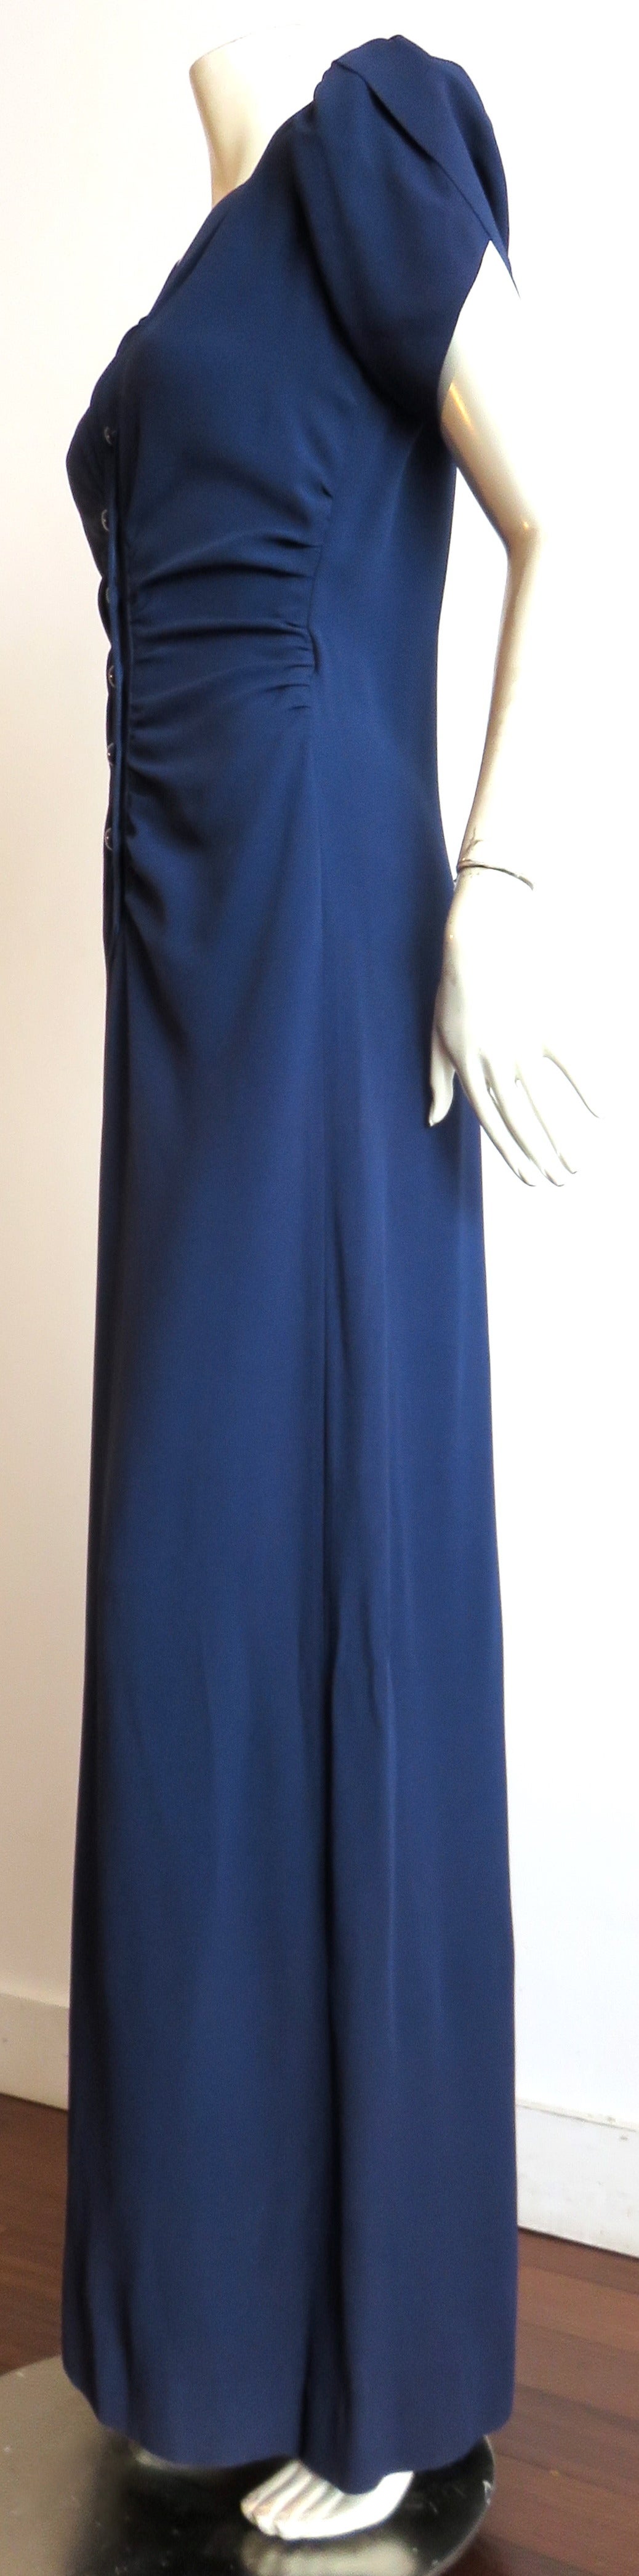 1983 YVES SAINT LAURENT 40's style blue crepe dress For Sale 3